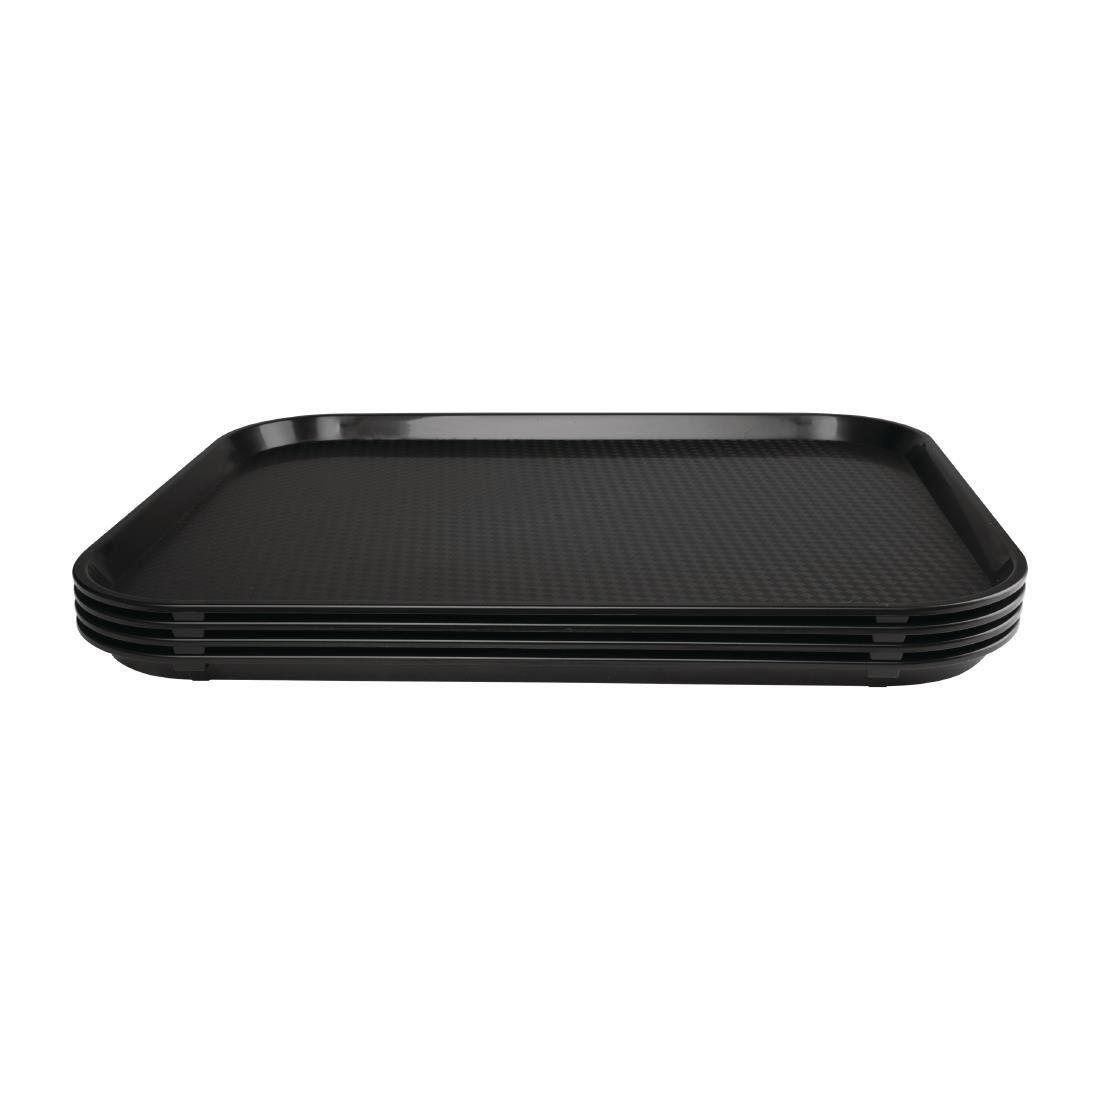 Olympia Kristallon Polypropylene Fast Food Tray Black Large 450mm - P507  - 3